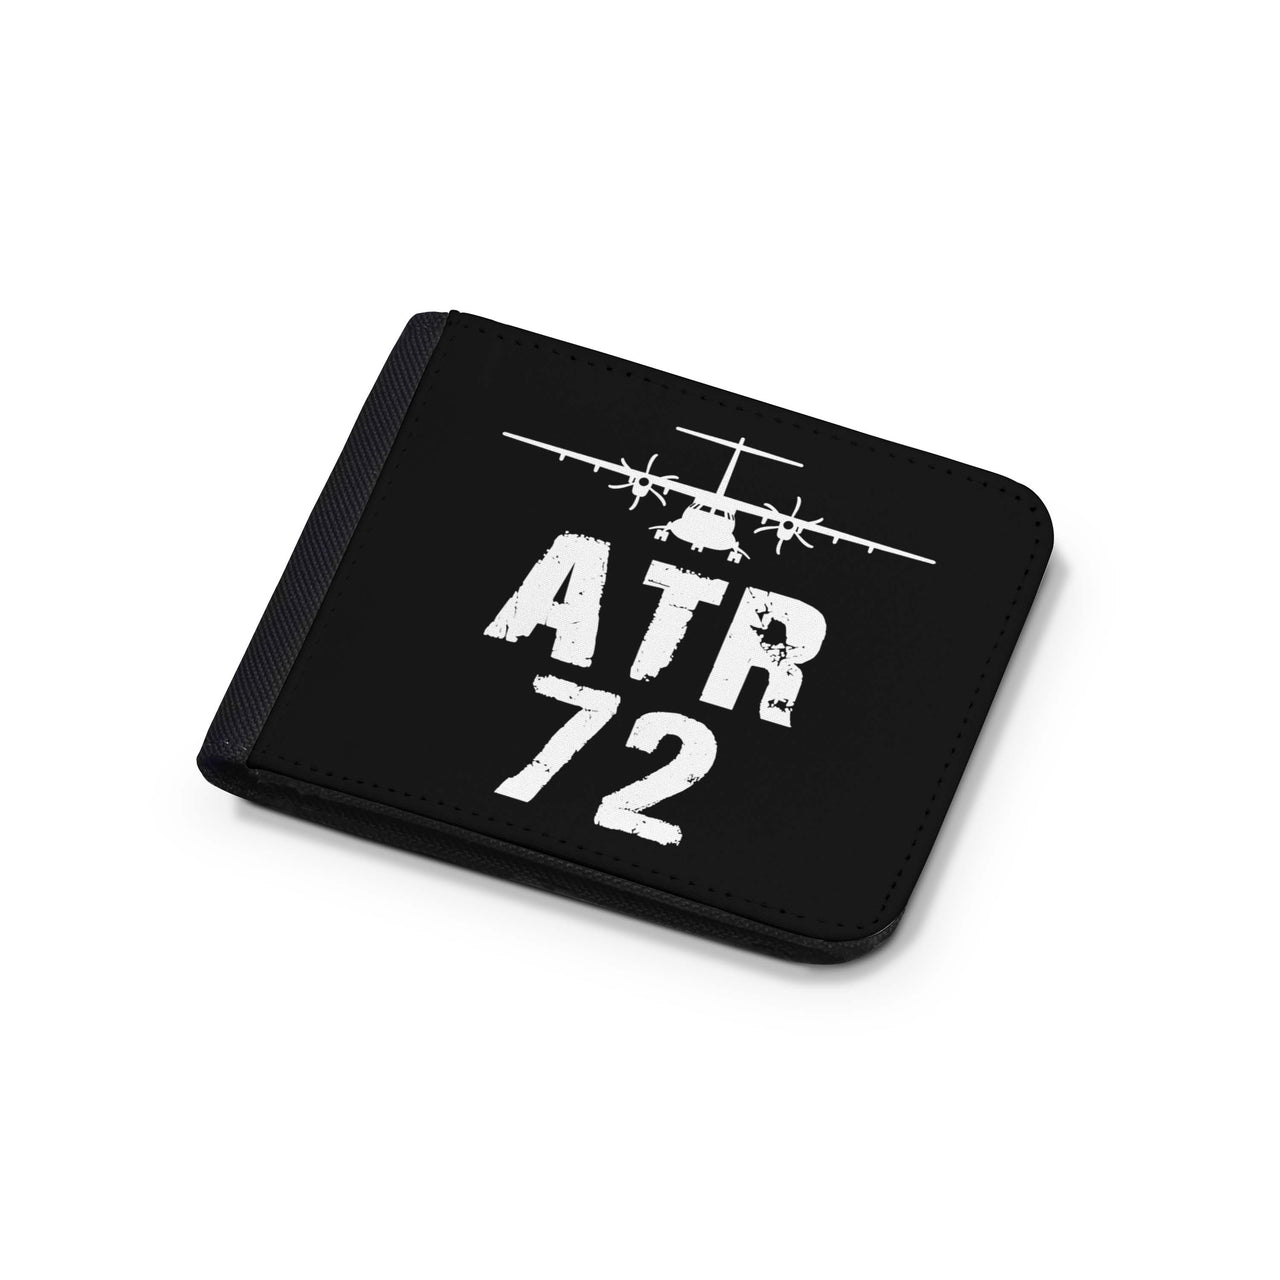 ATR-72 & Plane Designed Wallets